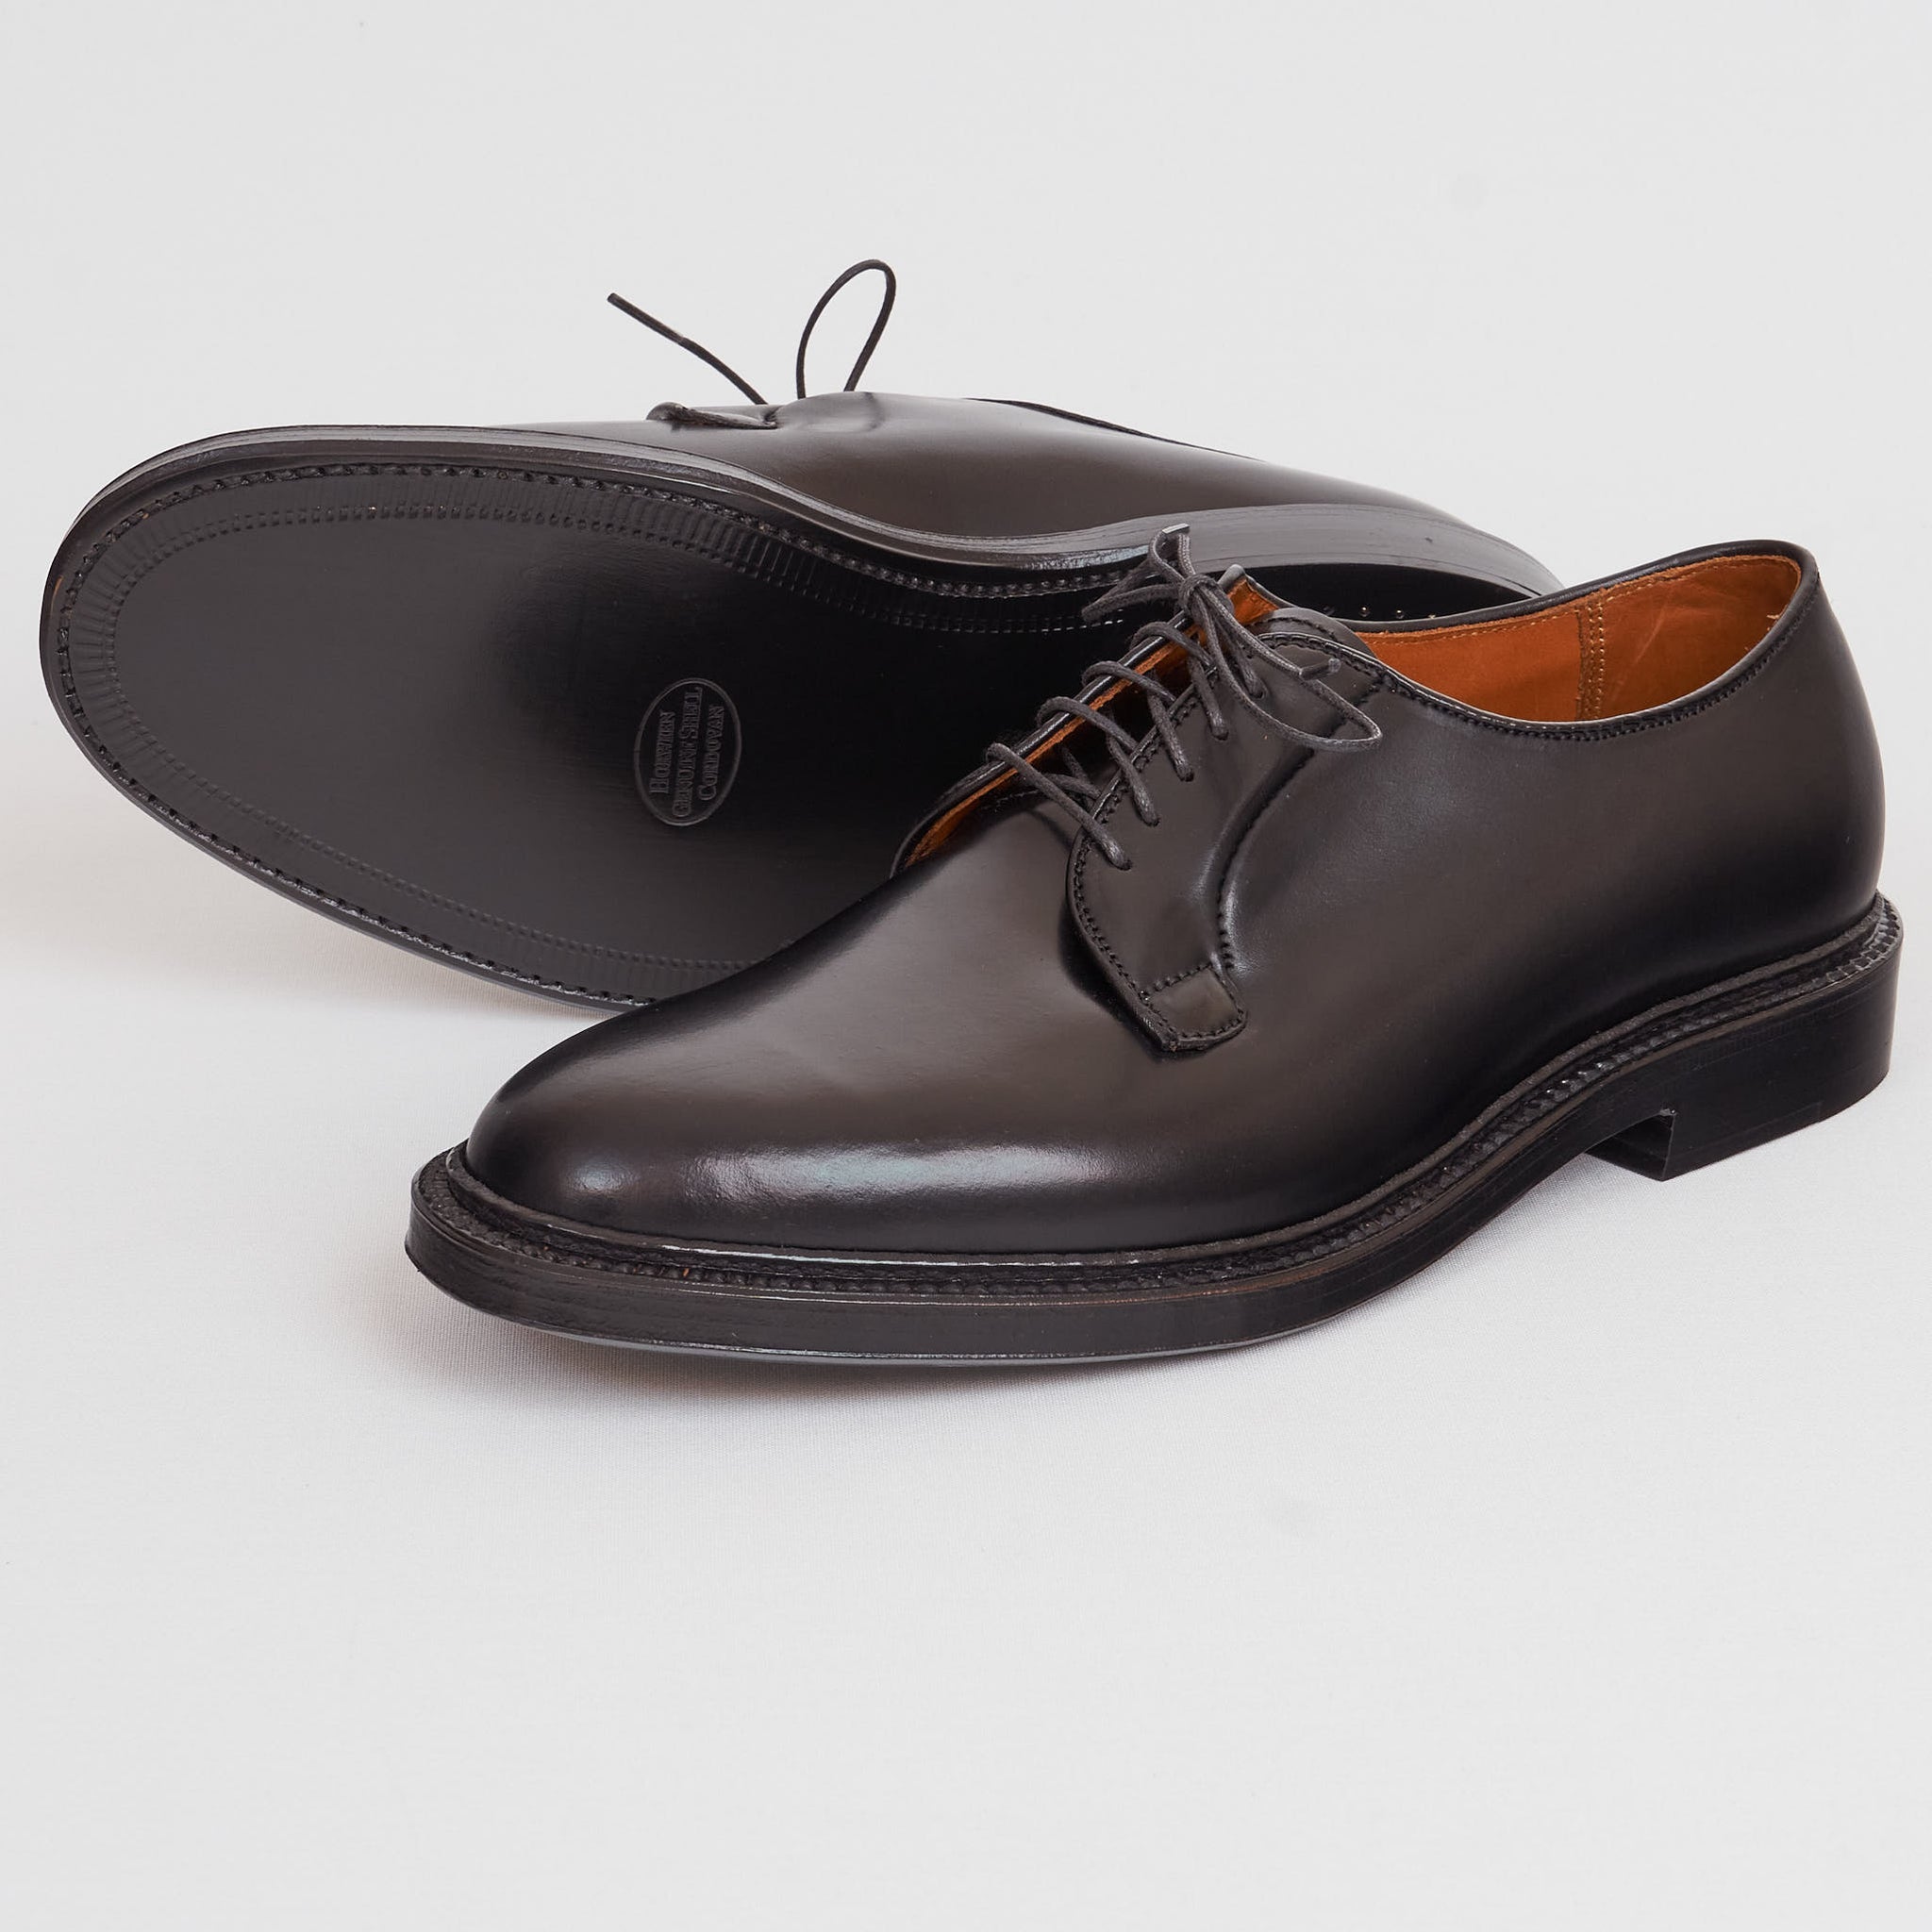 Alden Classic Shoes Cordovan - DeeCee style